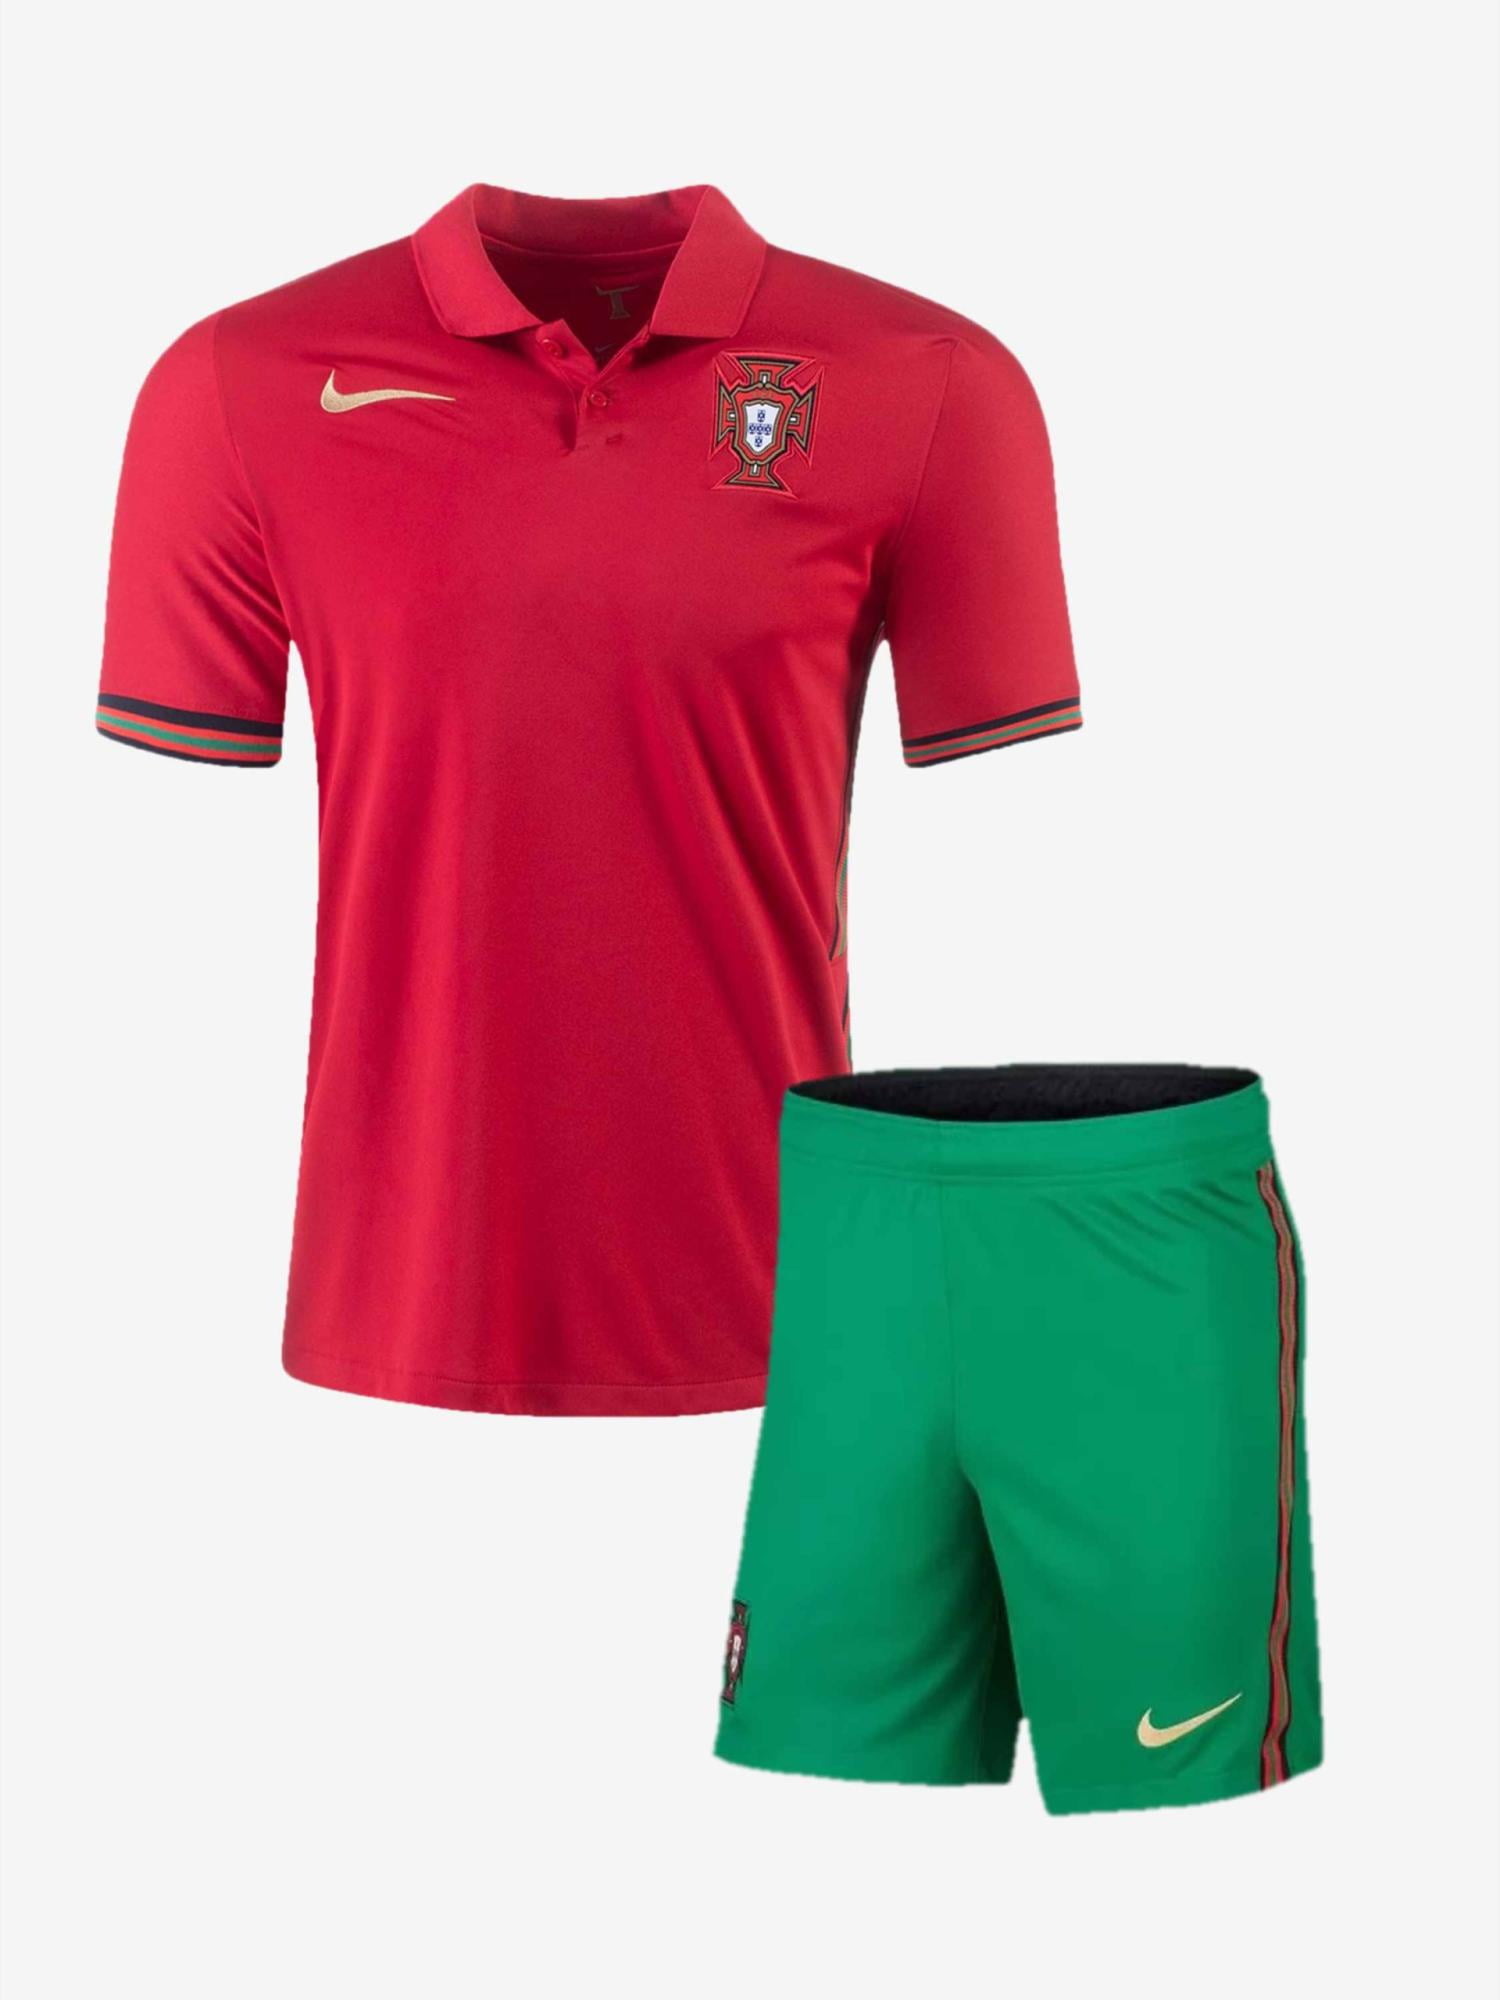 Portugal-Home-Football-Jersey-And-Shorts-Euro-21-Season